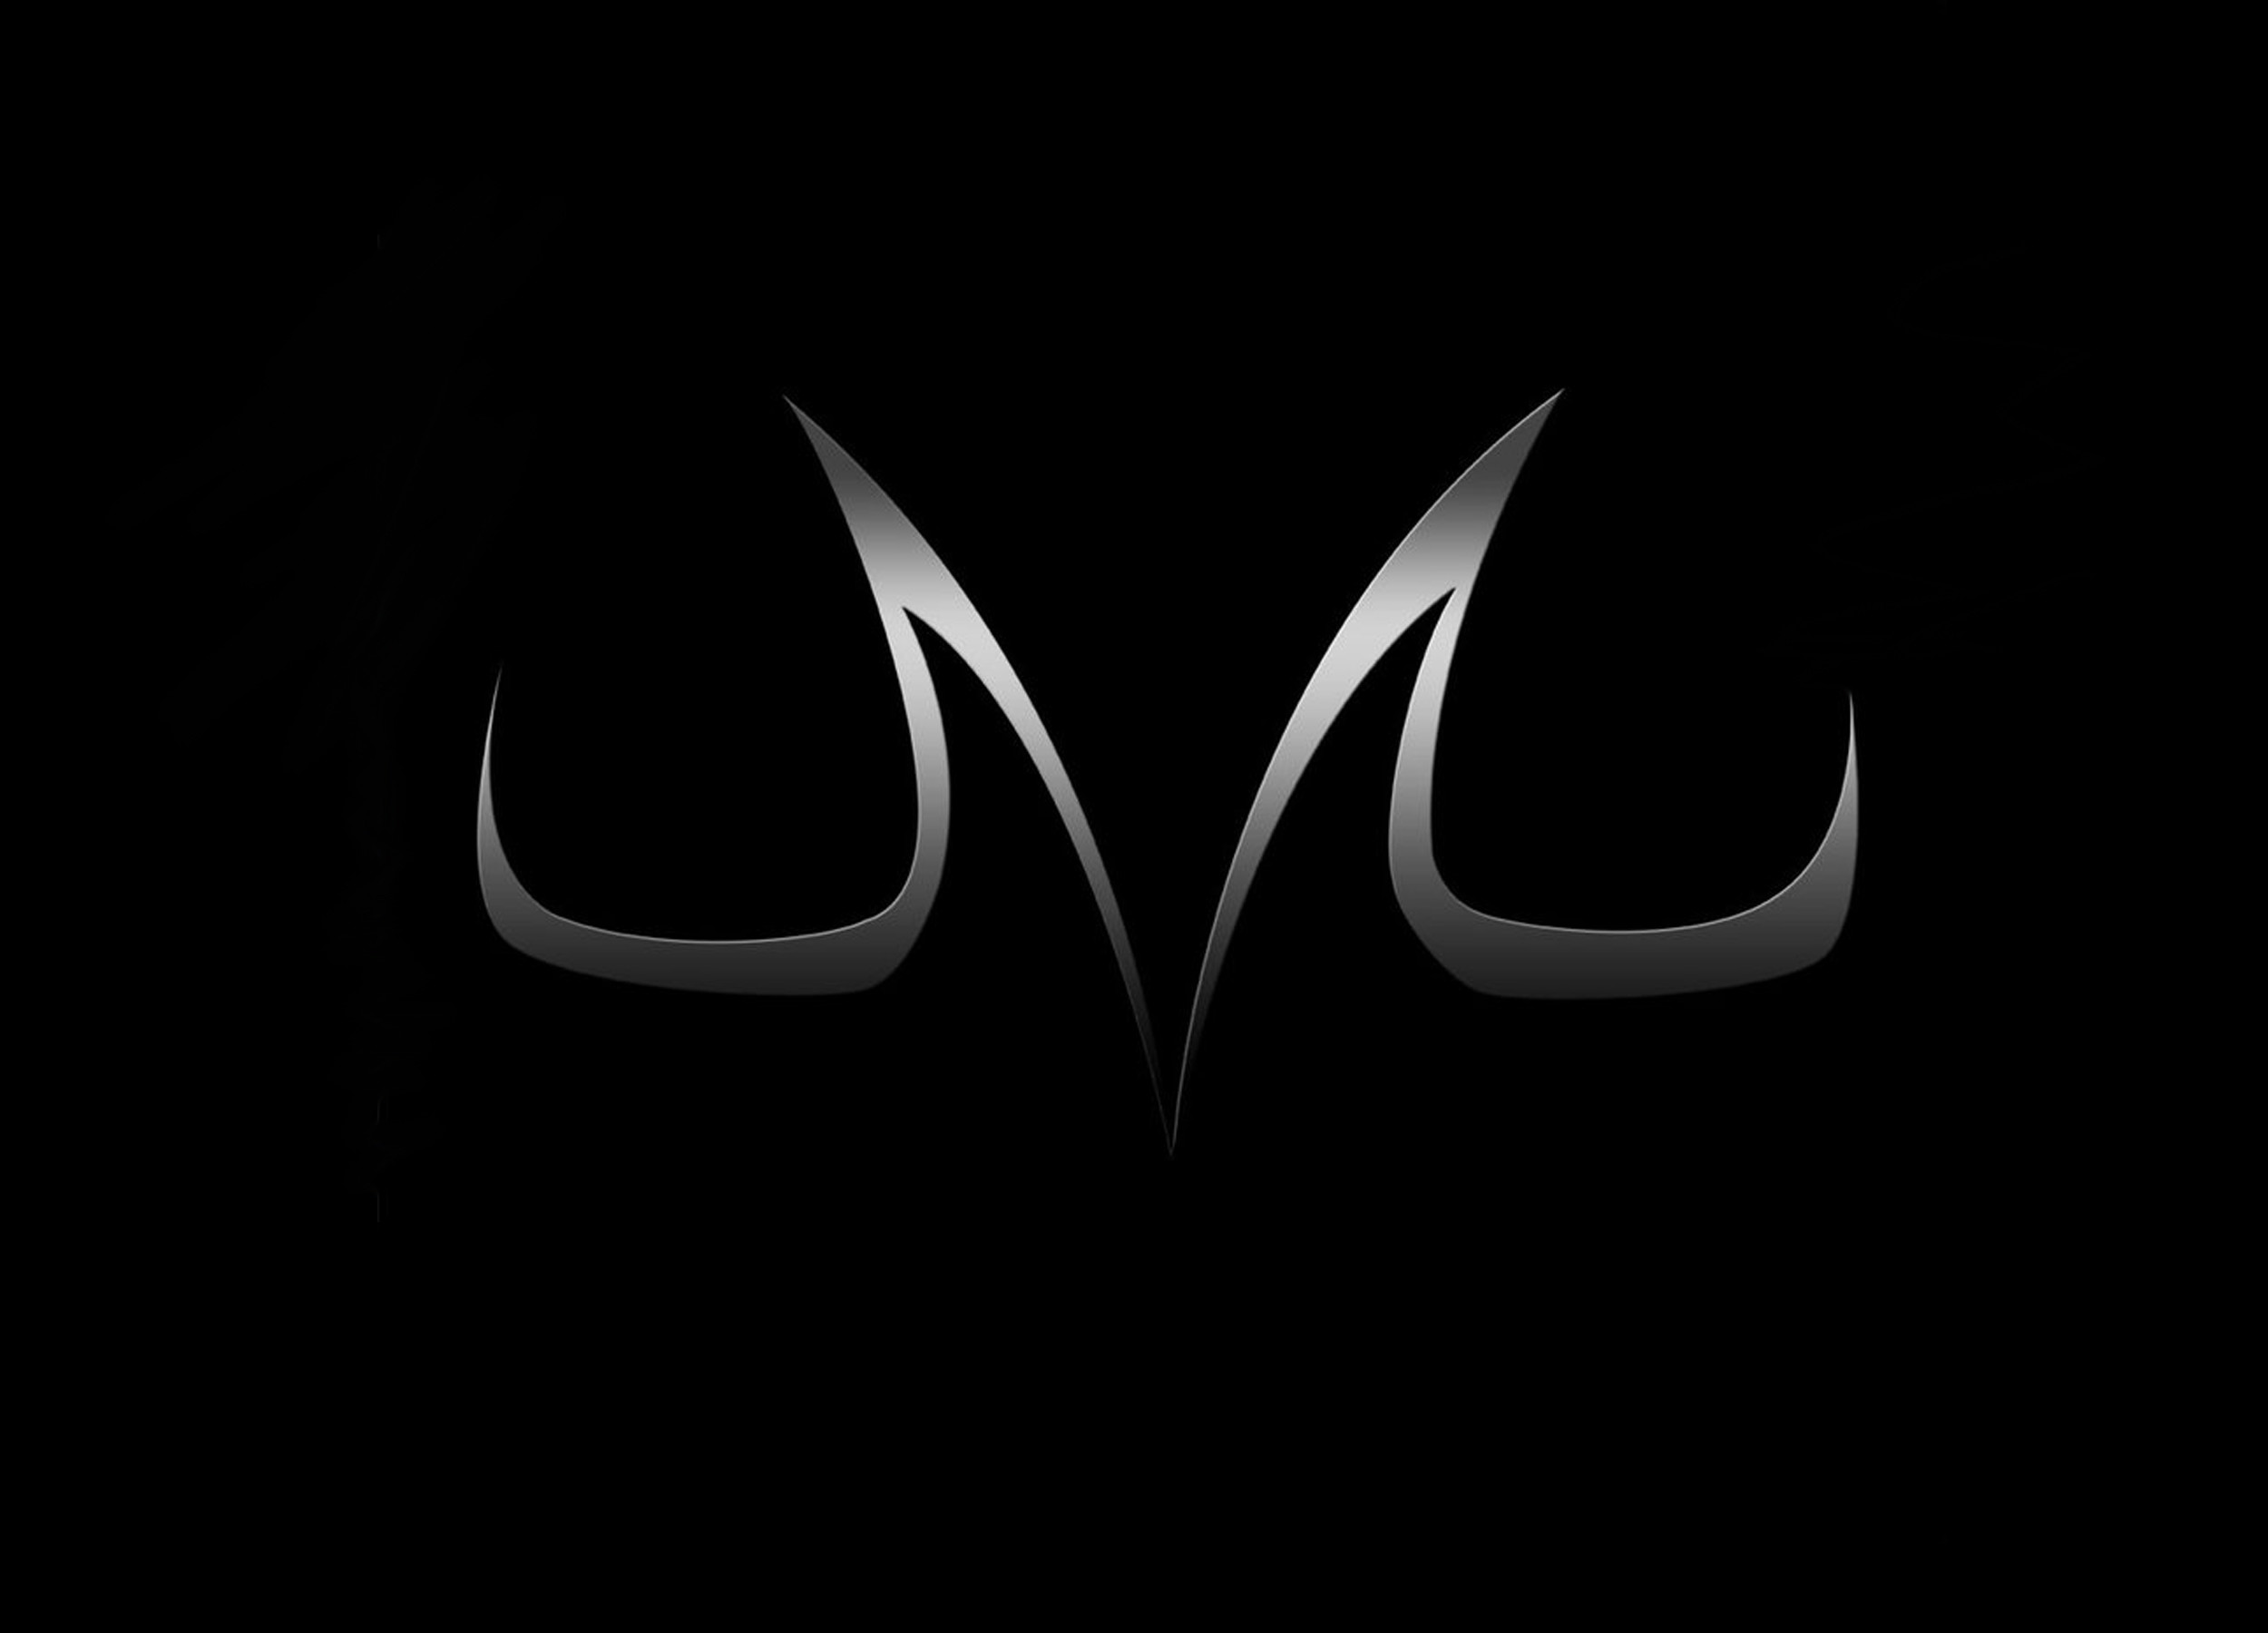 Xp black, Majin buu Logo Wallpaper – ForWallpaper.com